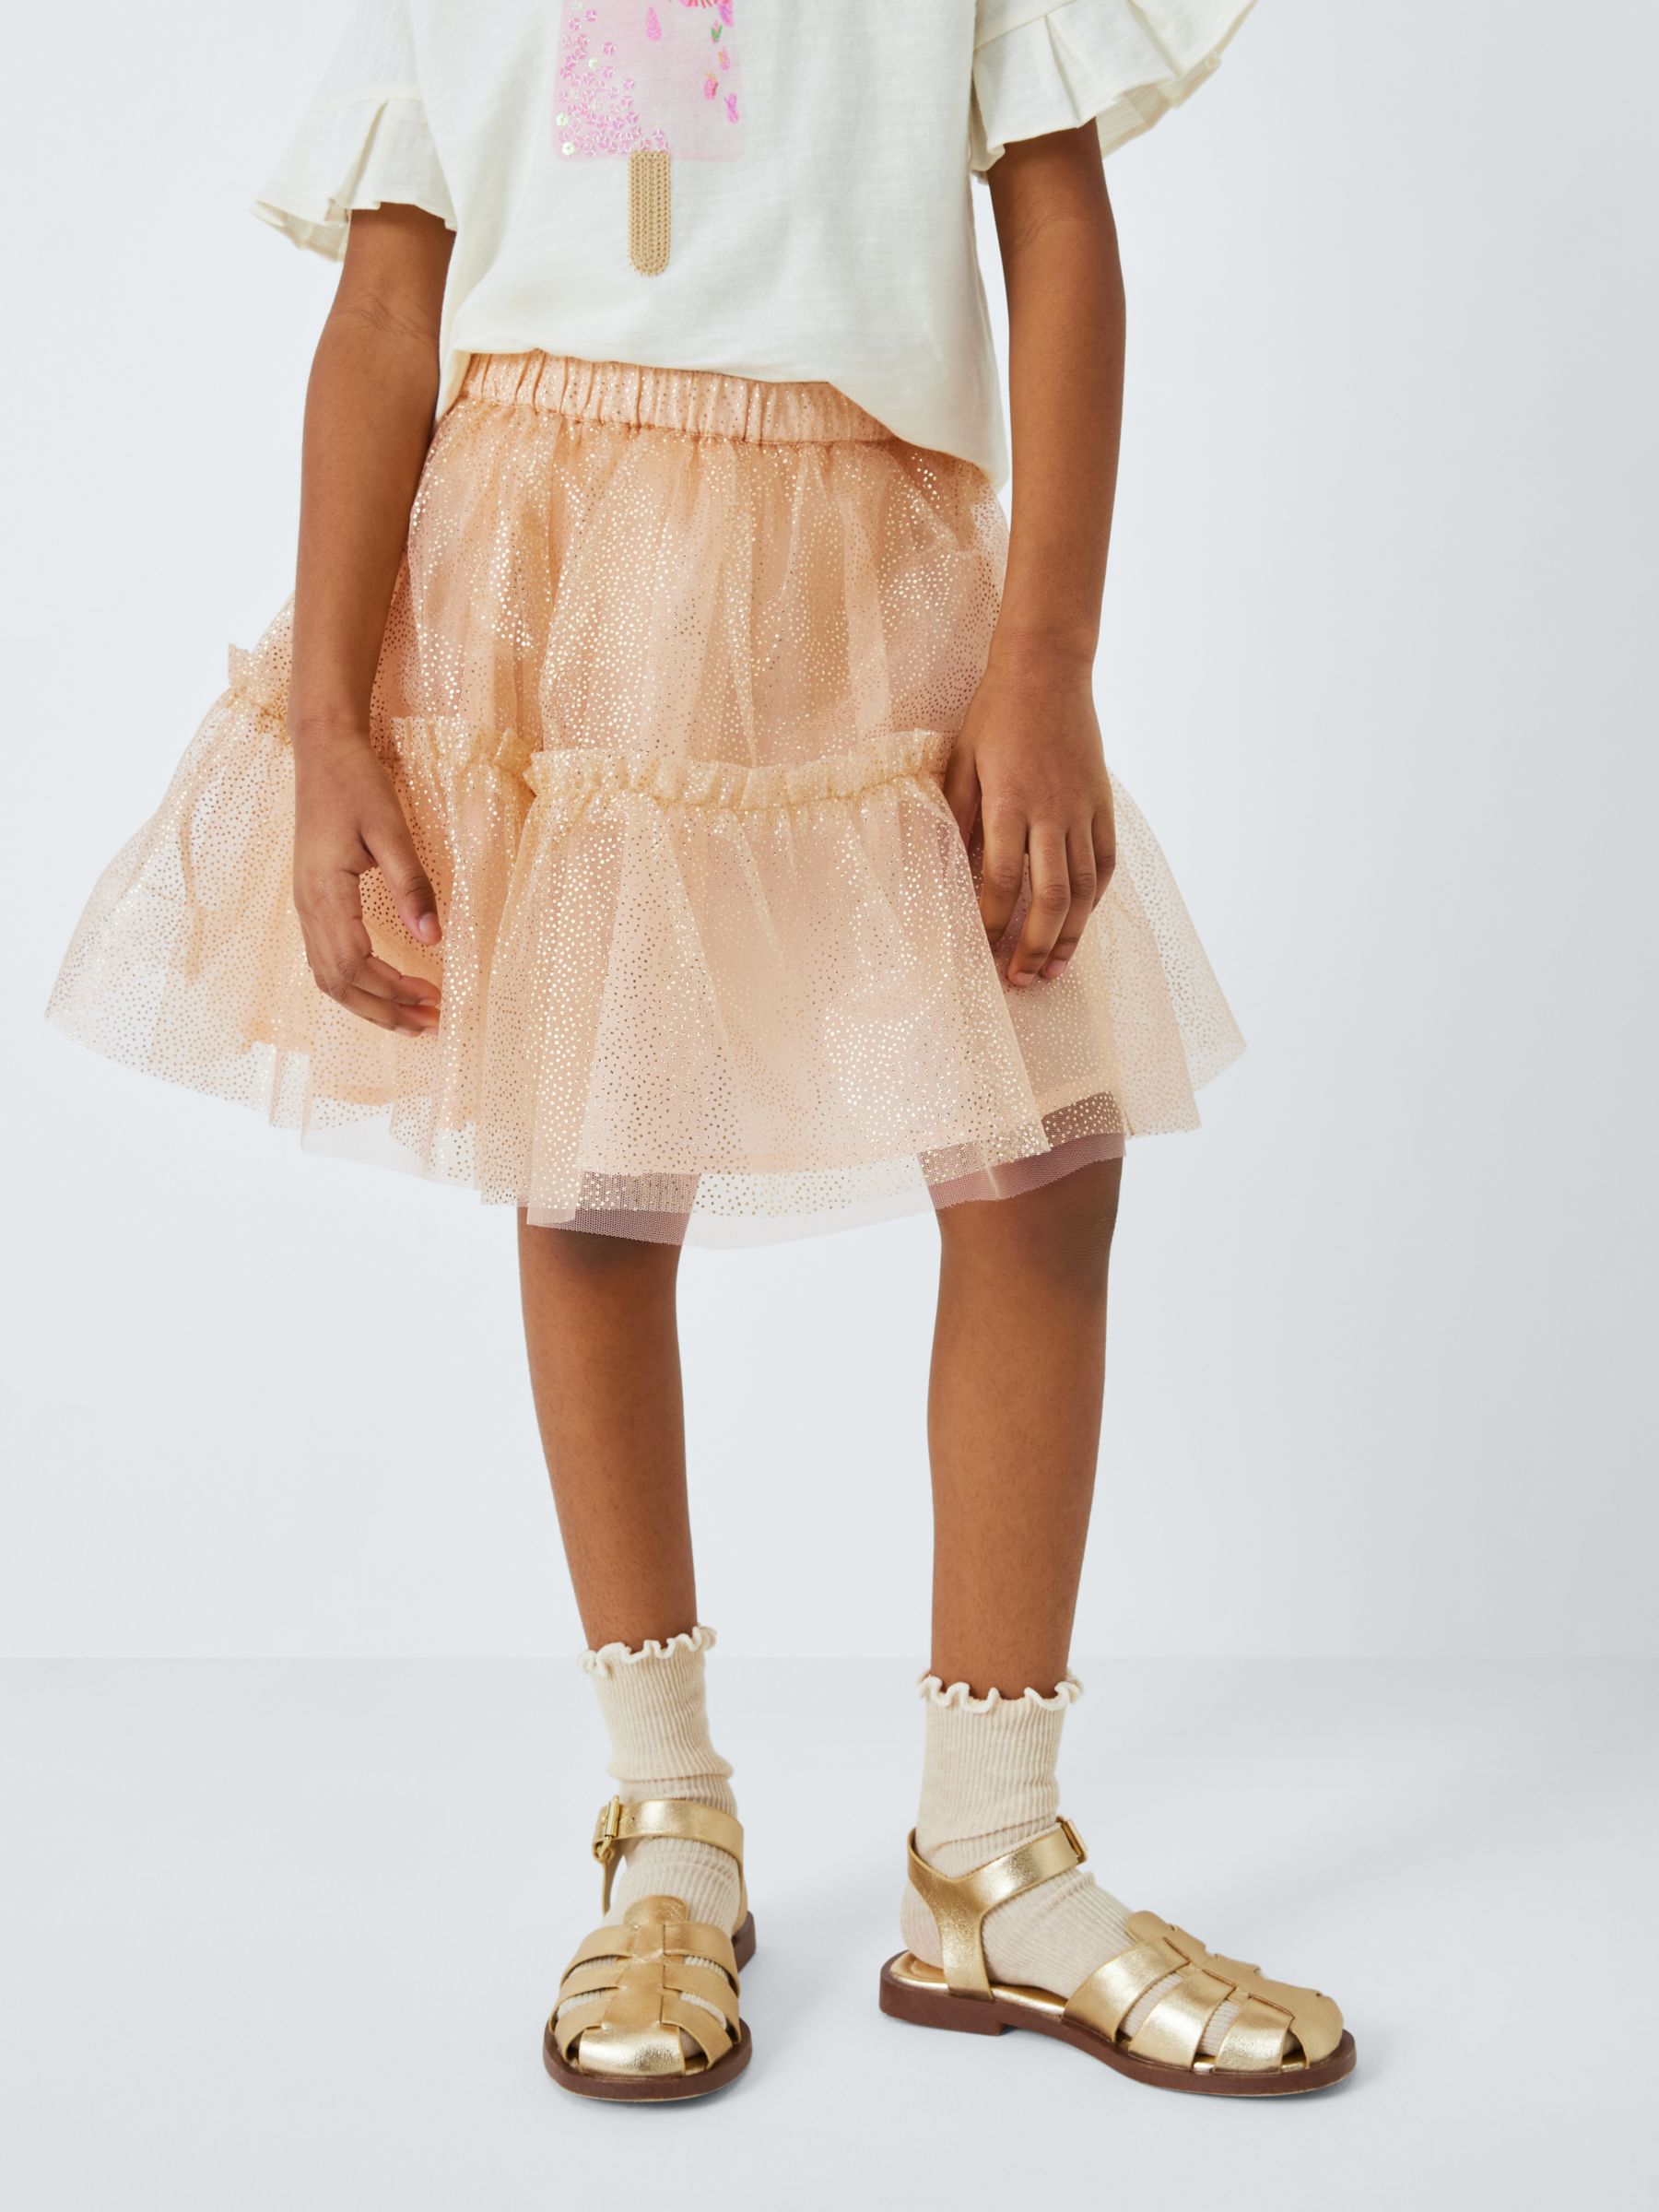 John Lewis Kids' Tulle Spot Skirt, Peach, 9 years